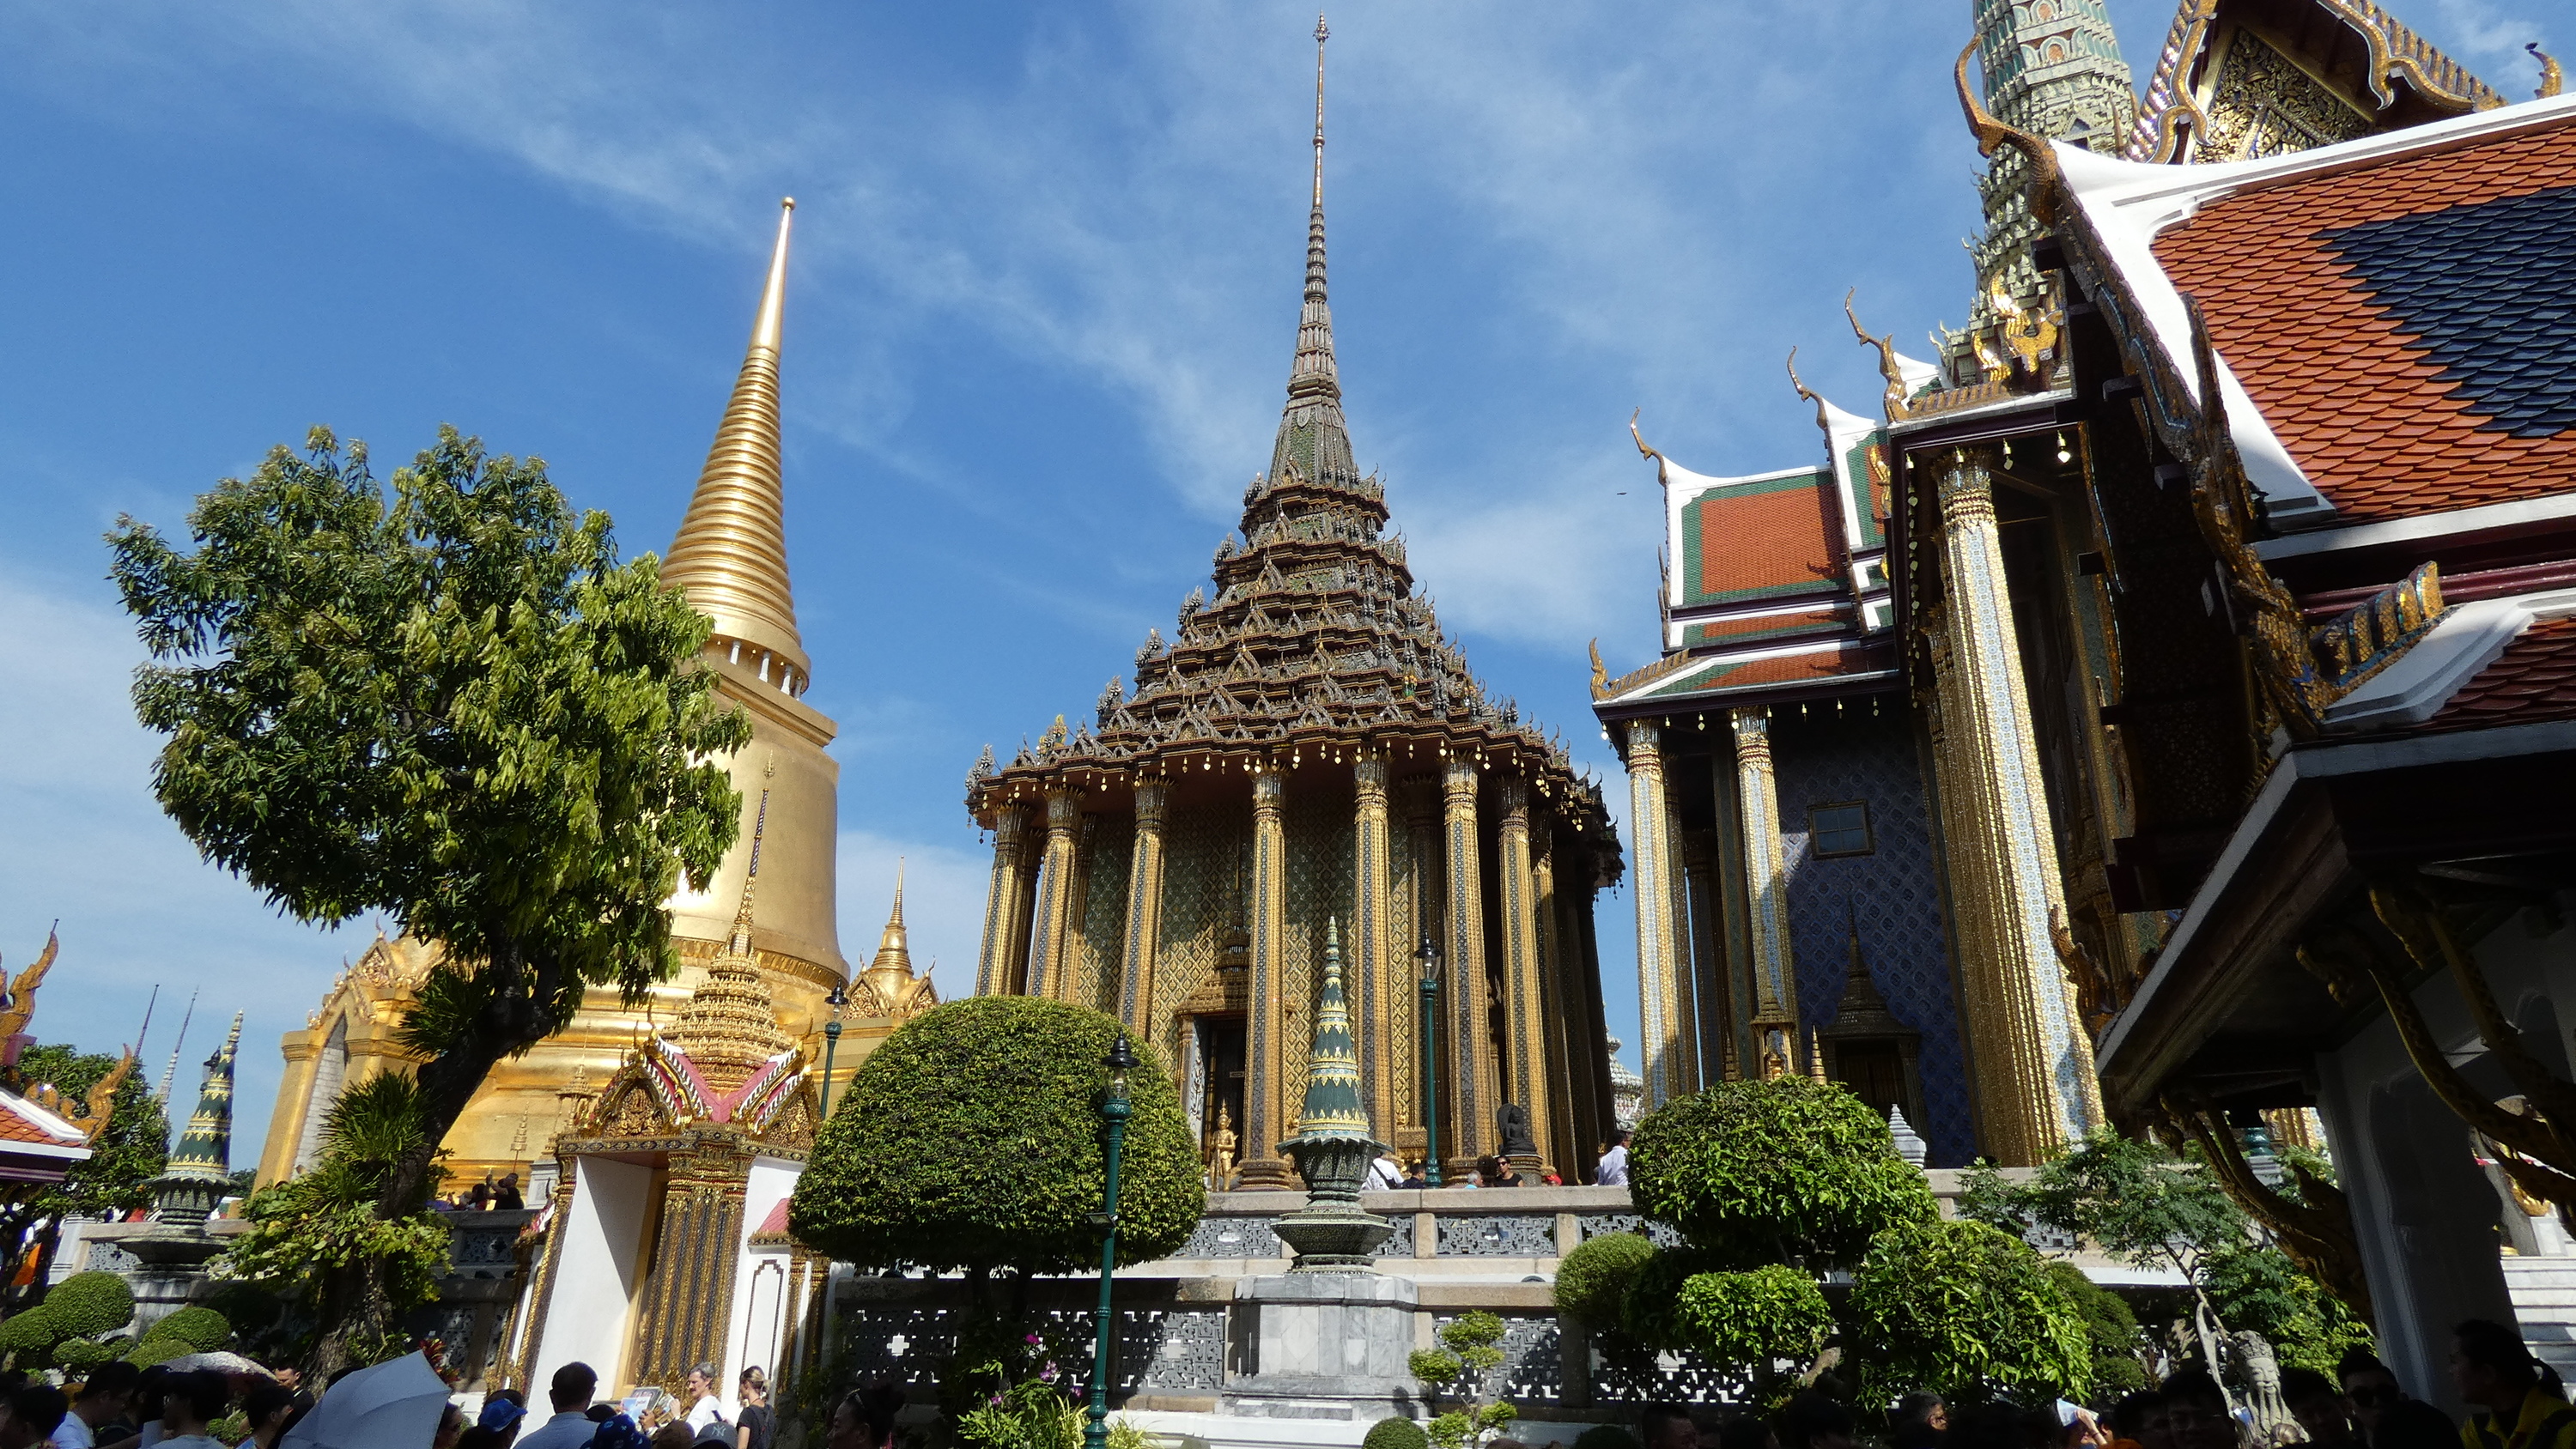 Bangkok - Wat Pran Kheo (königliches Kloster innerhalb des Grand Palace)